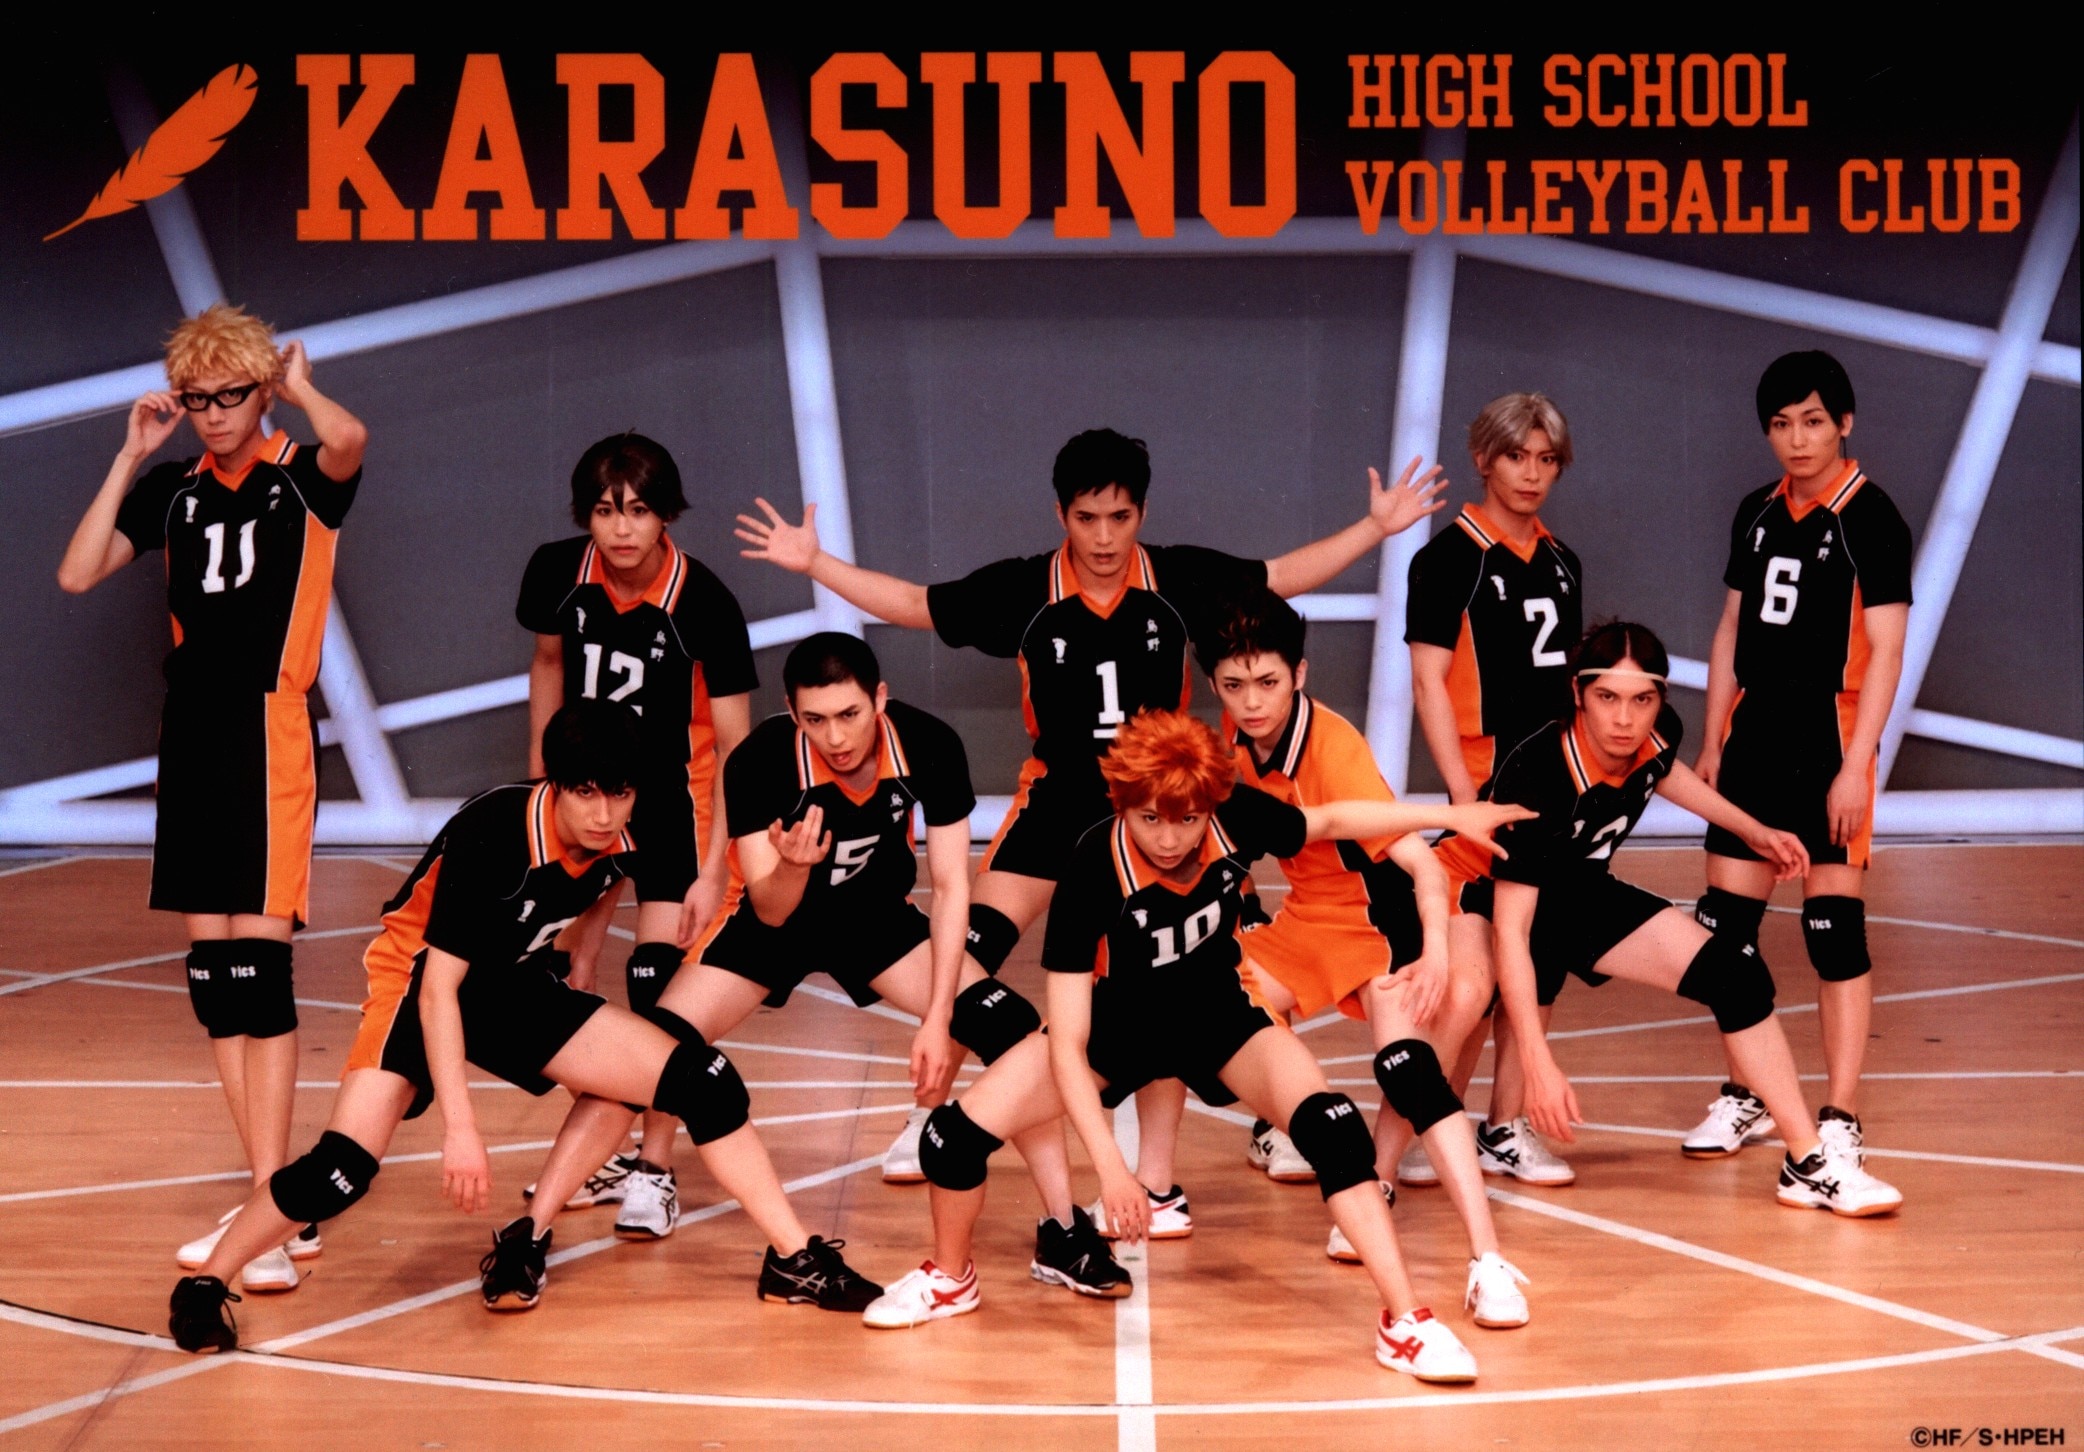 Laminated Haikyuu Poster Karasuno High School Volleyball Team